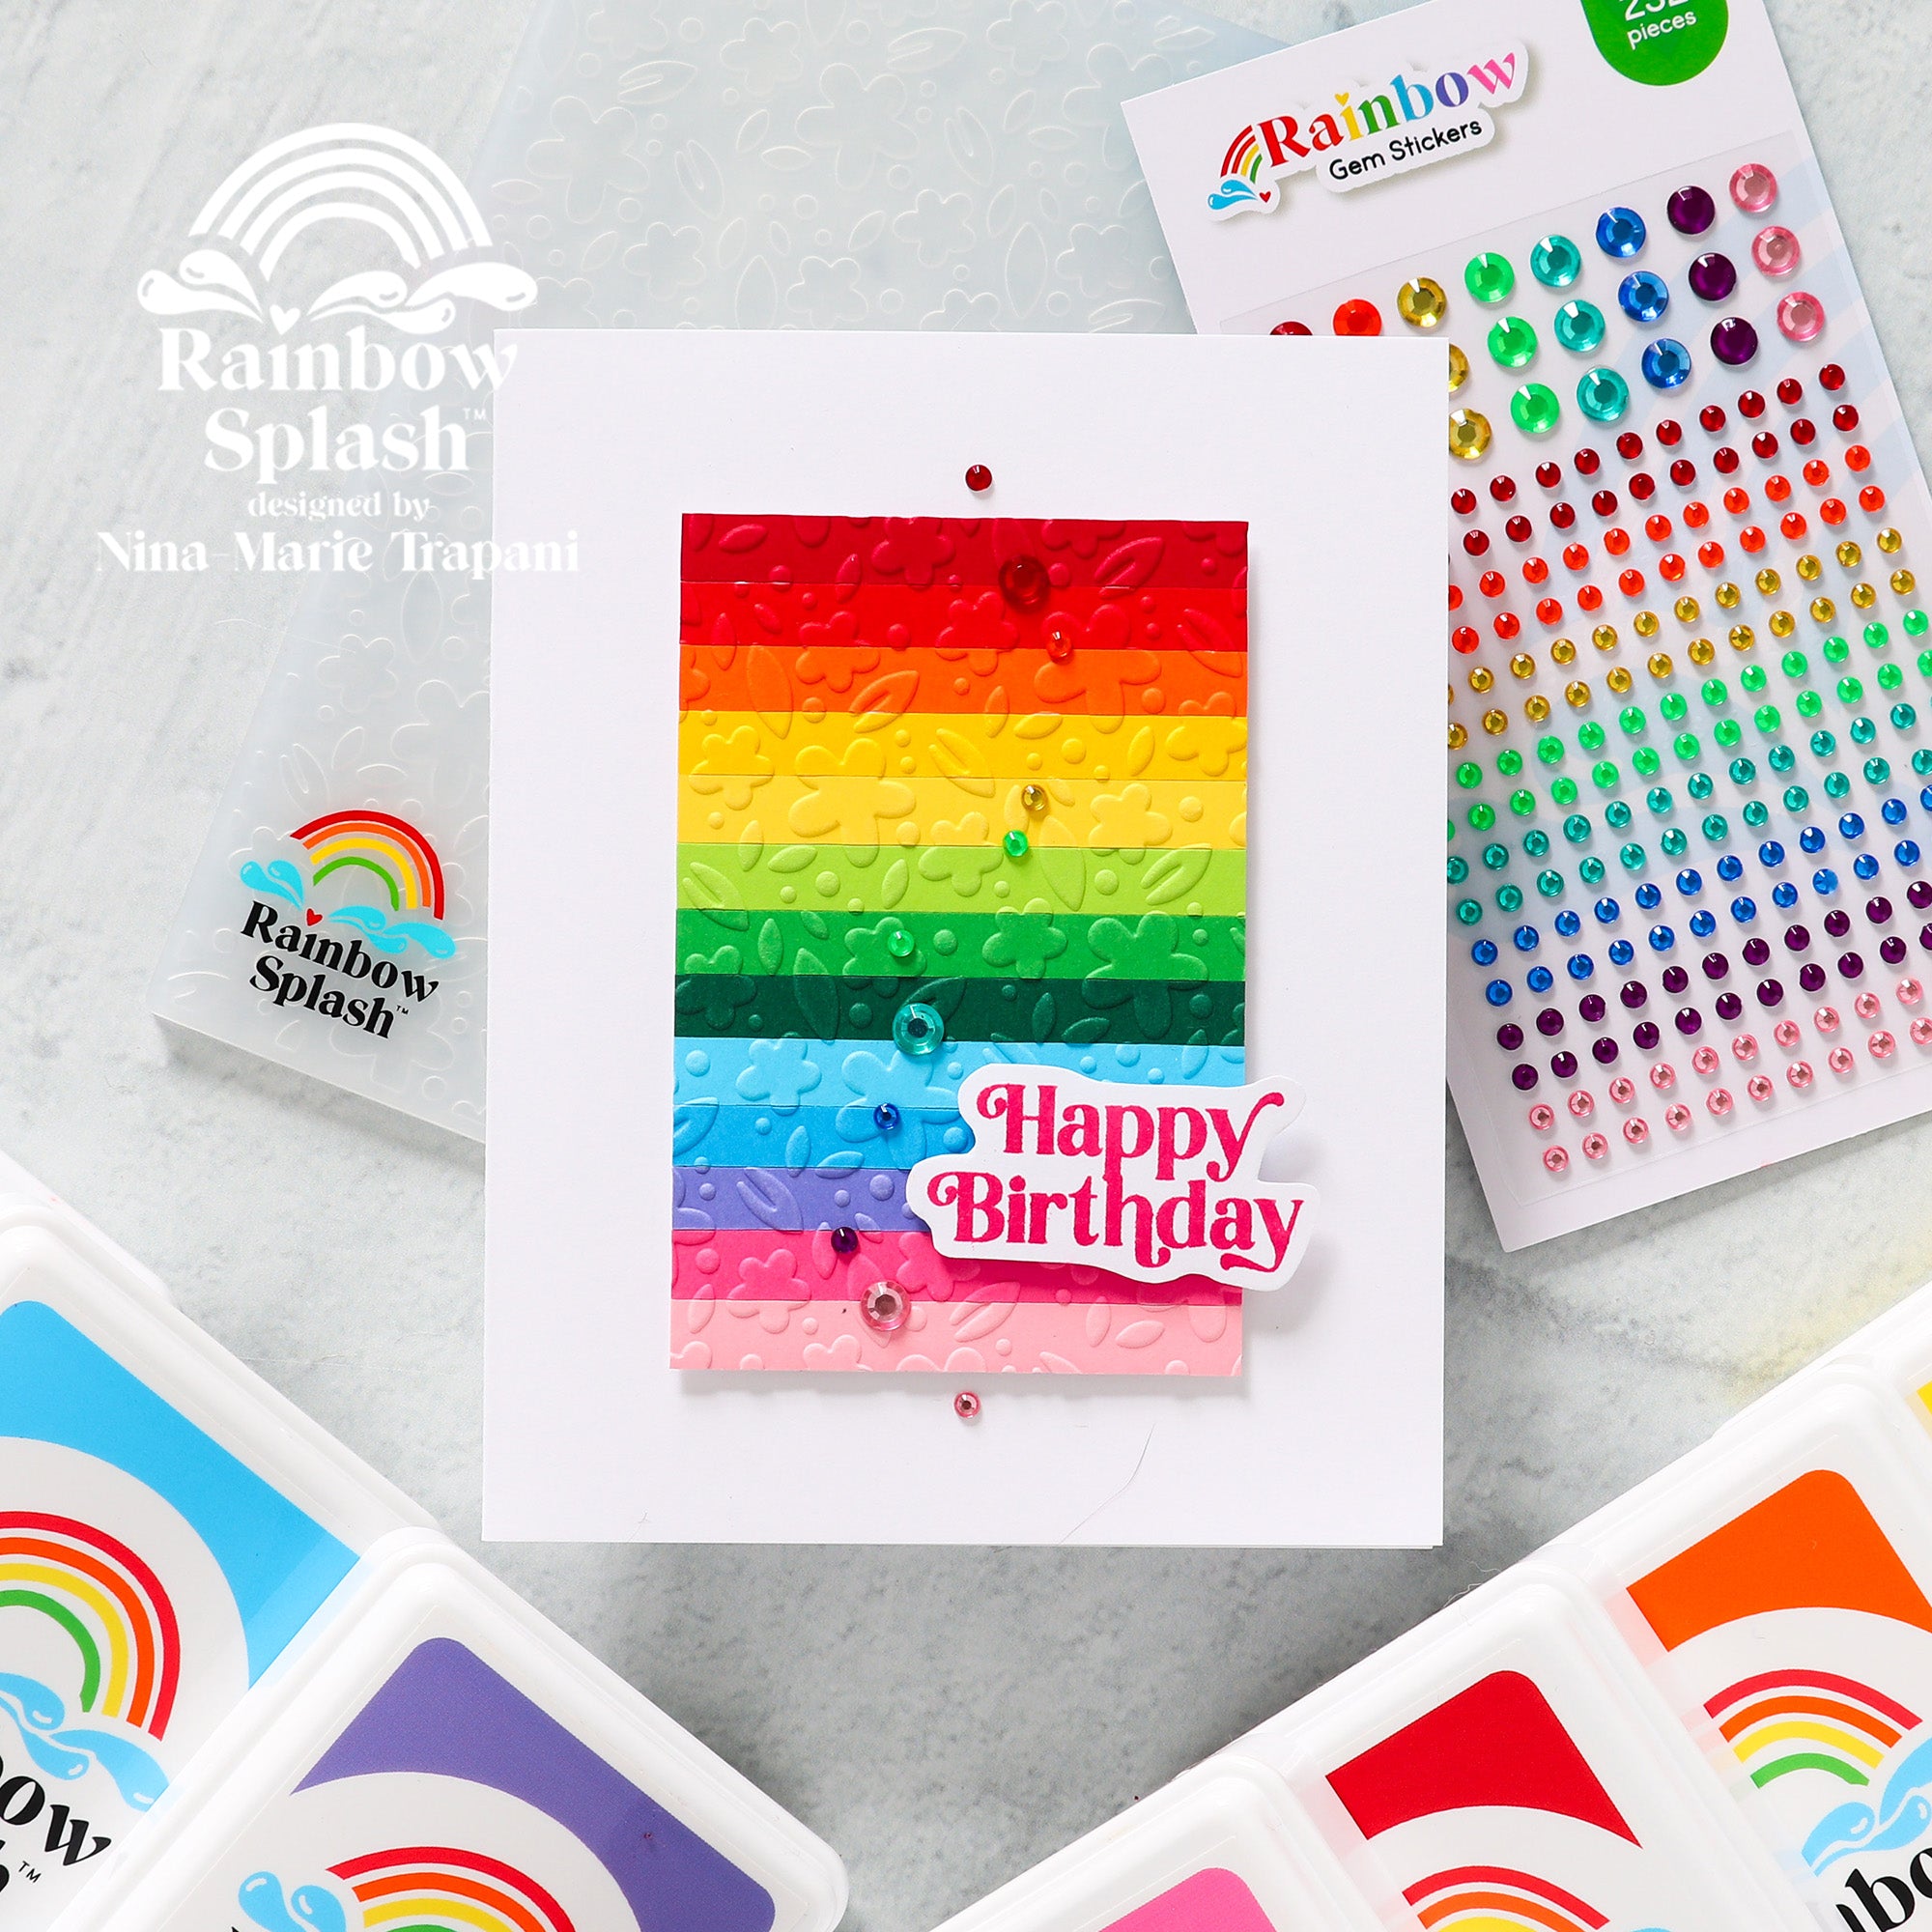 Rainbow Splash Cardstock Black rsc16 – Simon Says Stamp